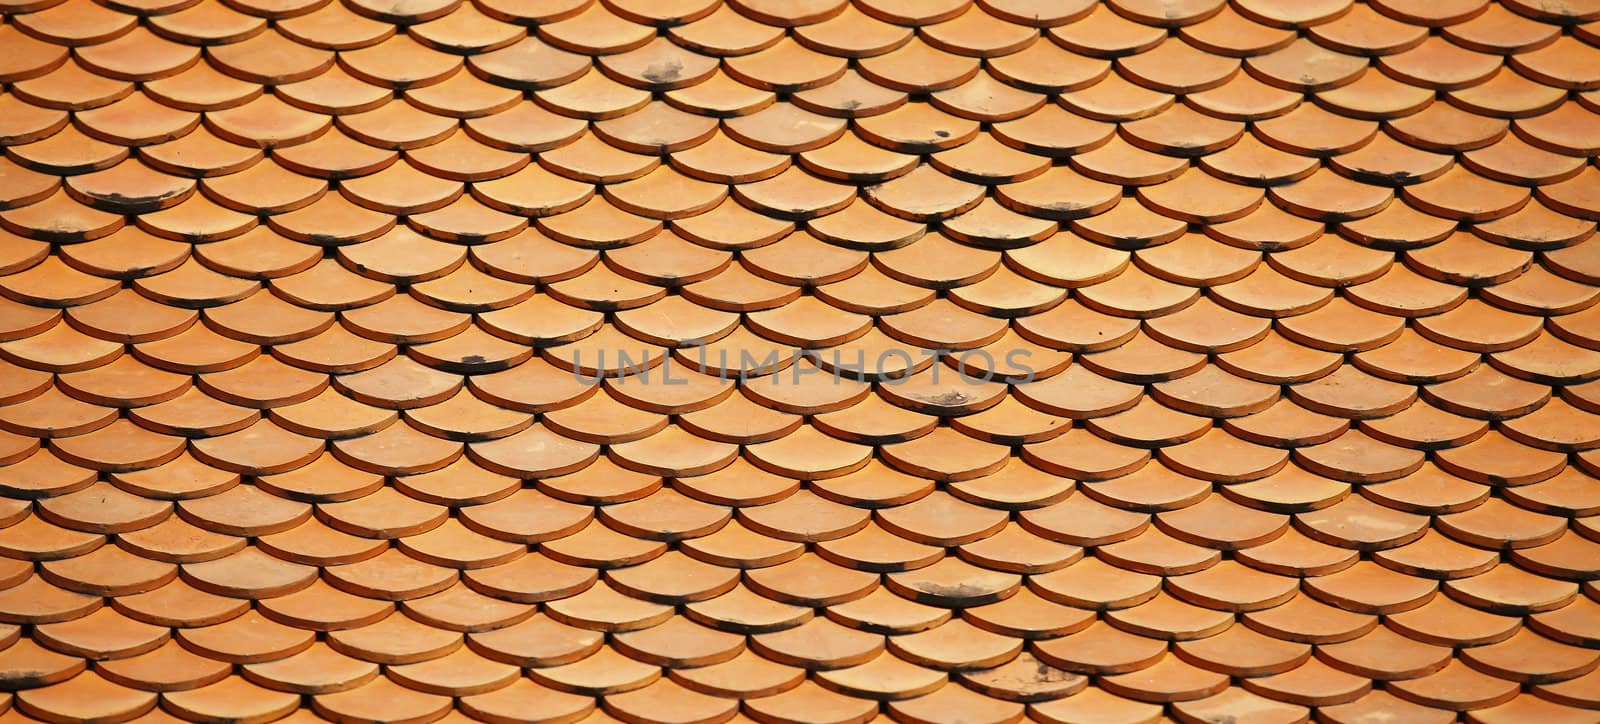 Modern tiles roof  by jame_j@homail.com